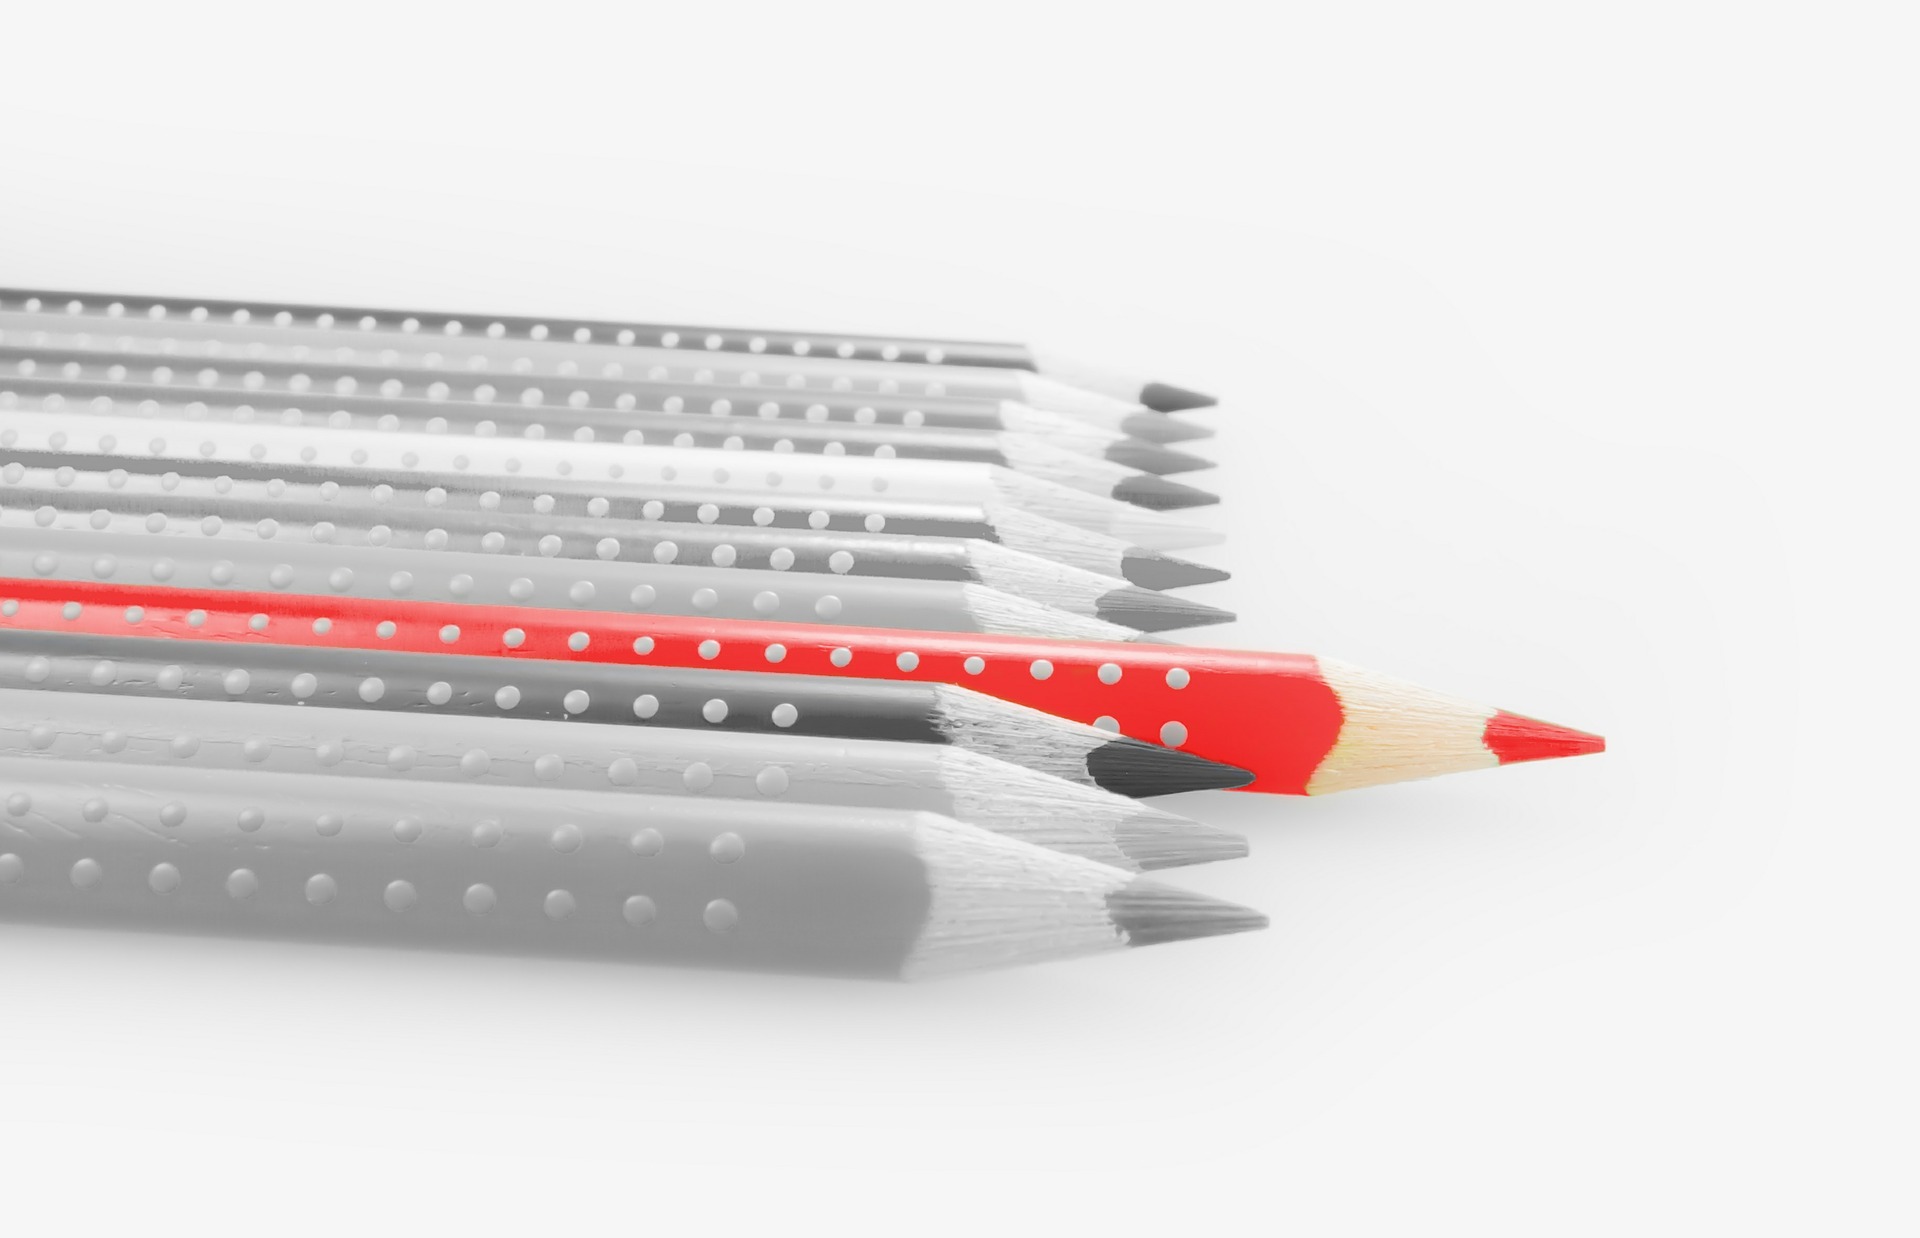 Fila de lápices con lápiz rojo sobresaliendo